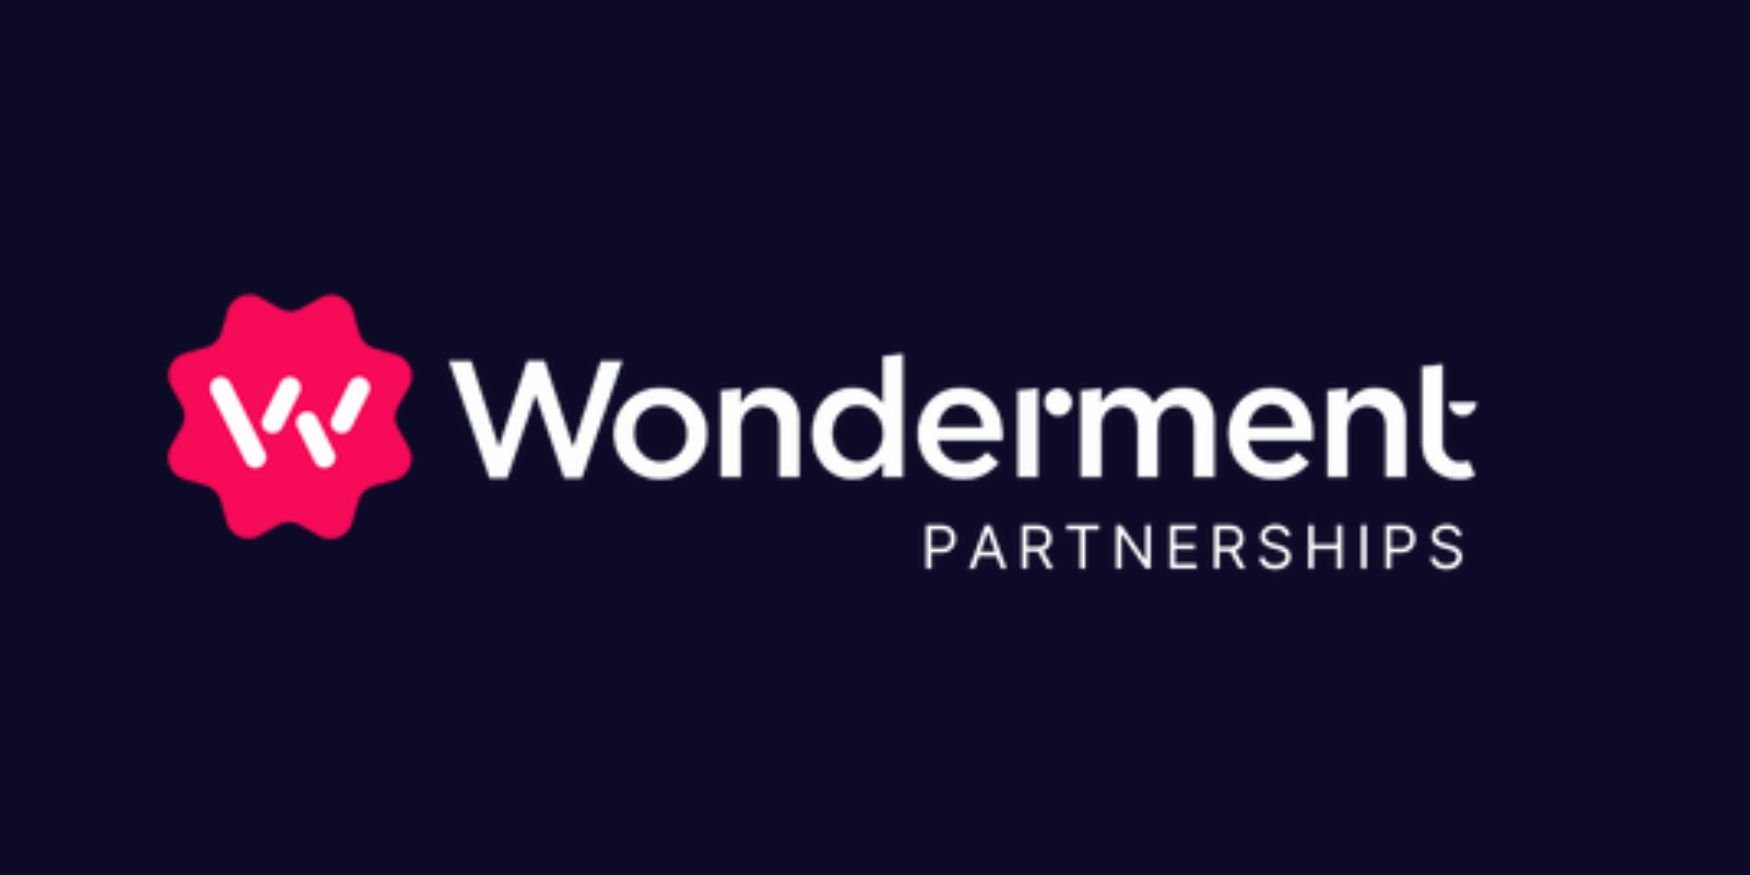 Wonderment partnerships program launch